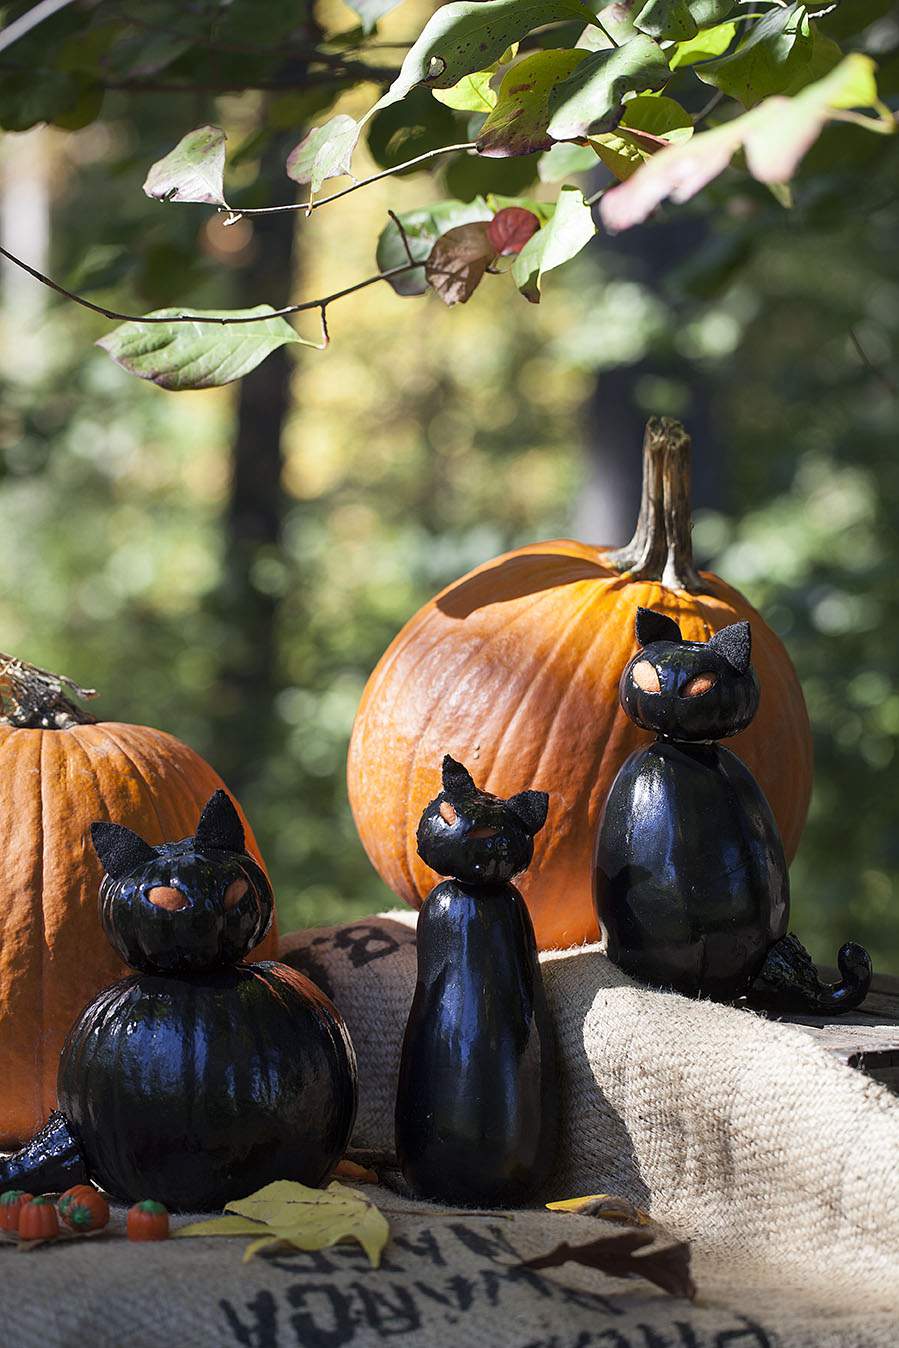 cat pumpkin designs